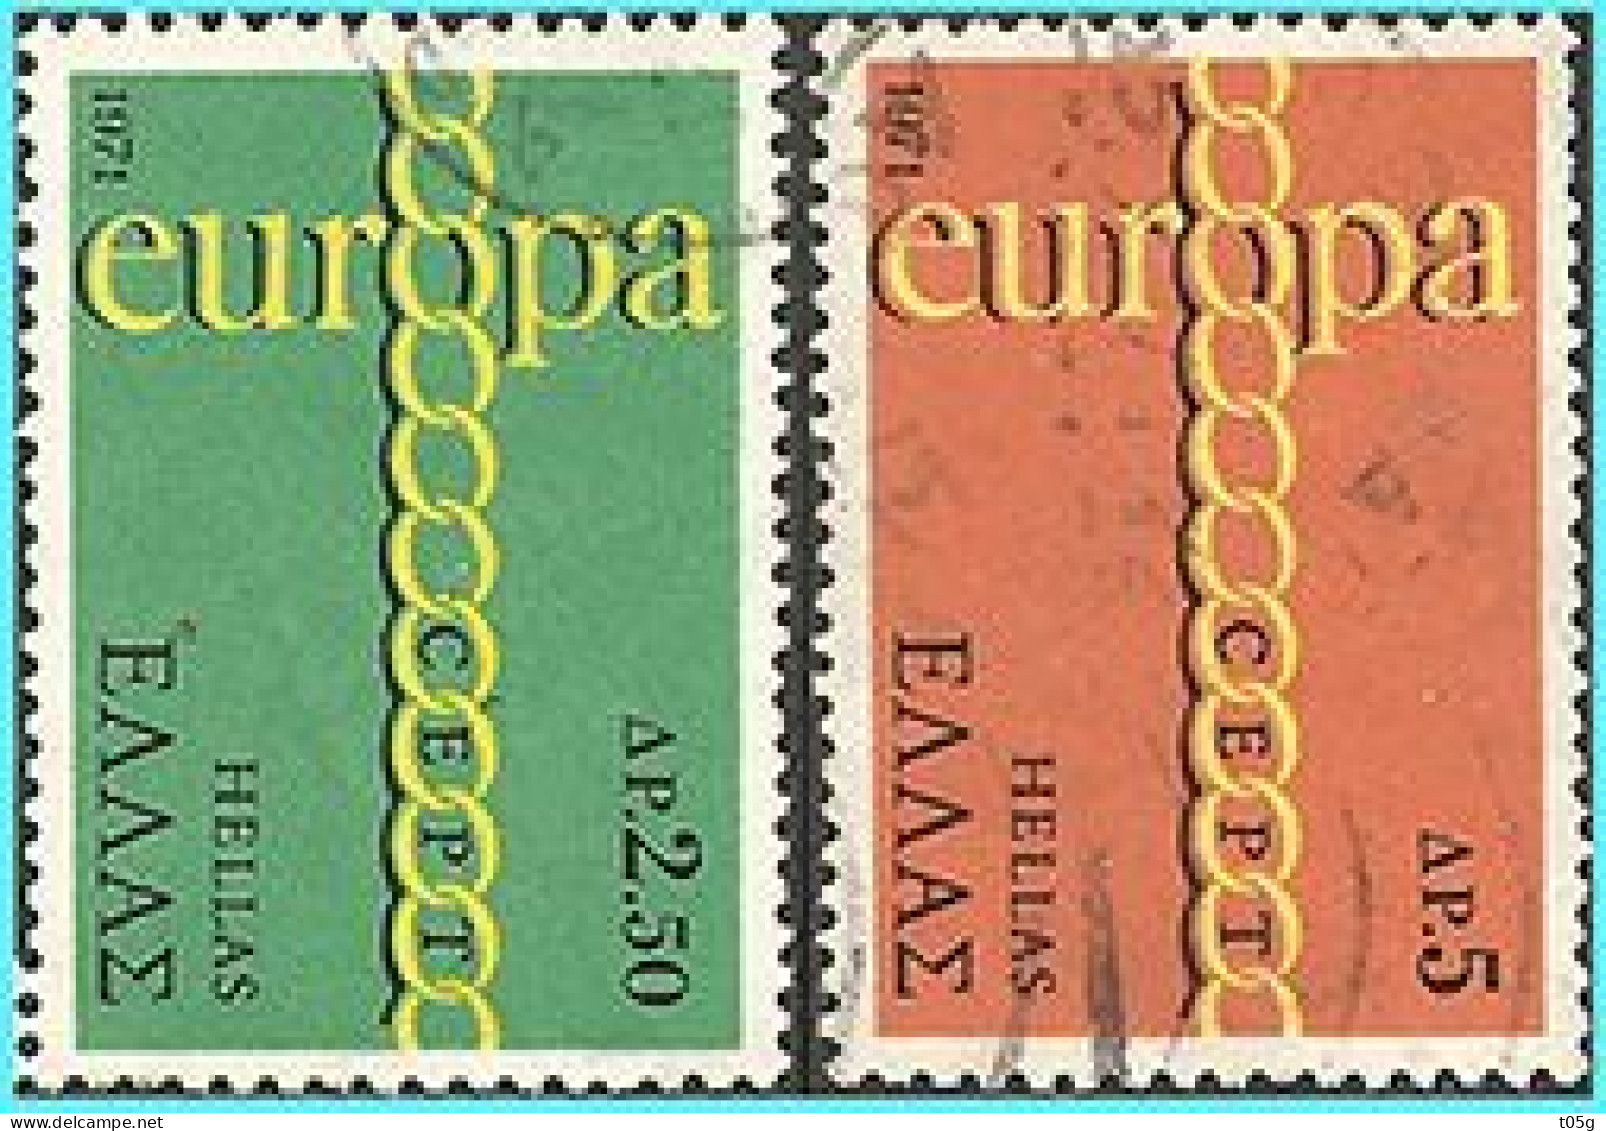 GREECE- GRECE  - HELLAS 1971: RUROPA Compl. Set Used - Gebruikt